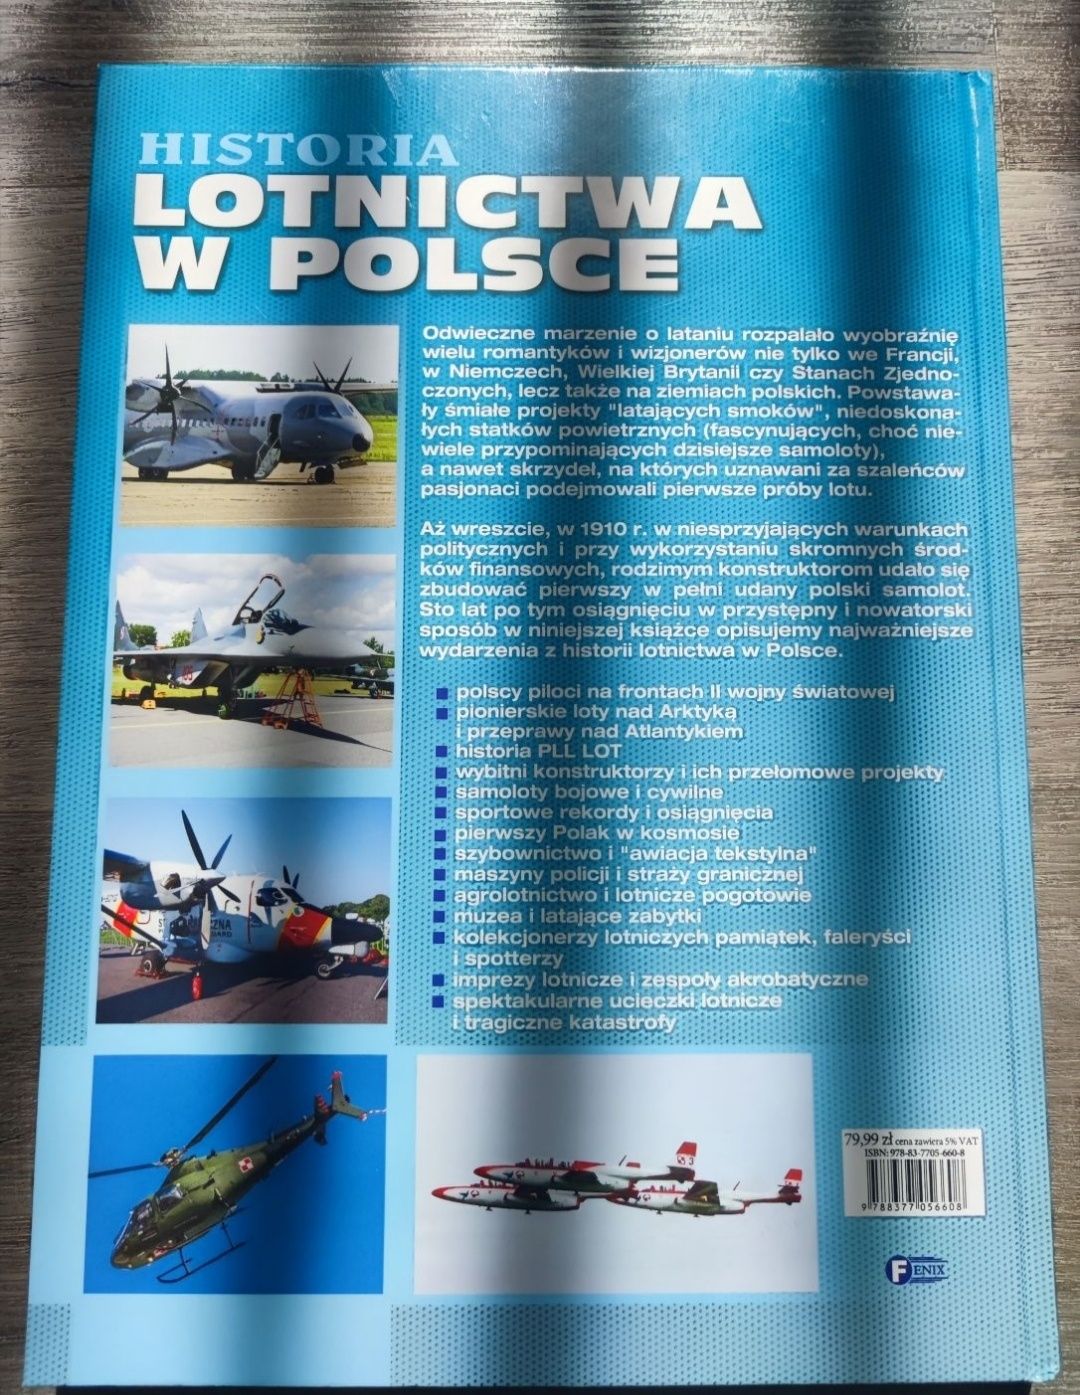 Książka "Historia lotnictwa w Polsce"